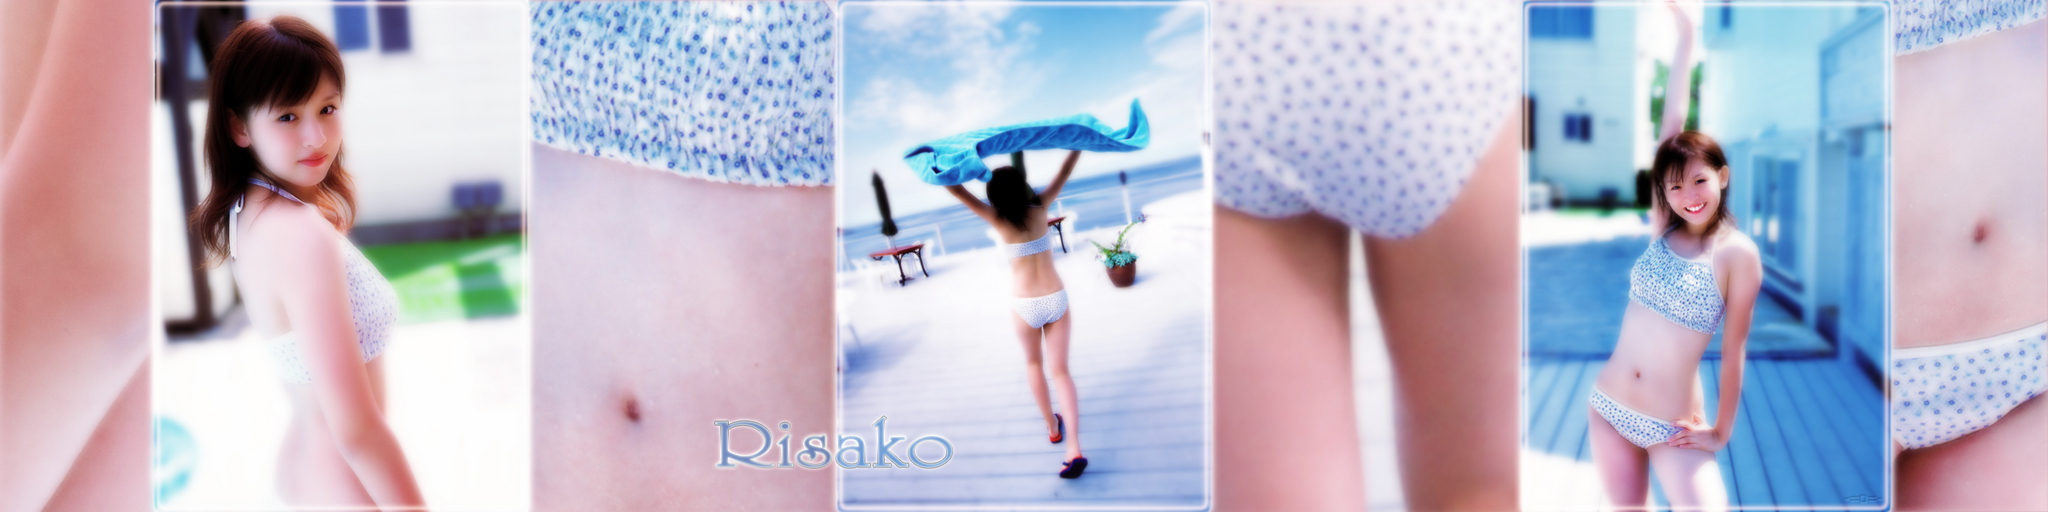 Risako-Swimsuit1.jpg